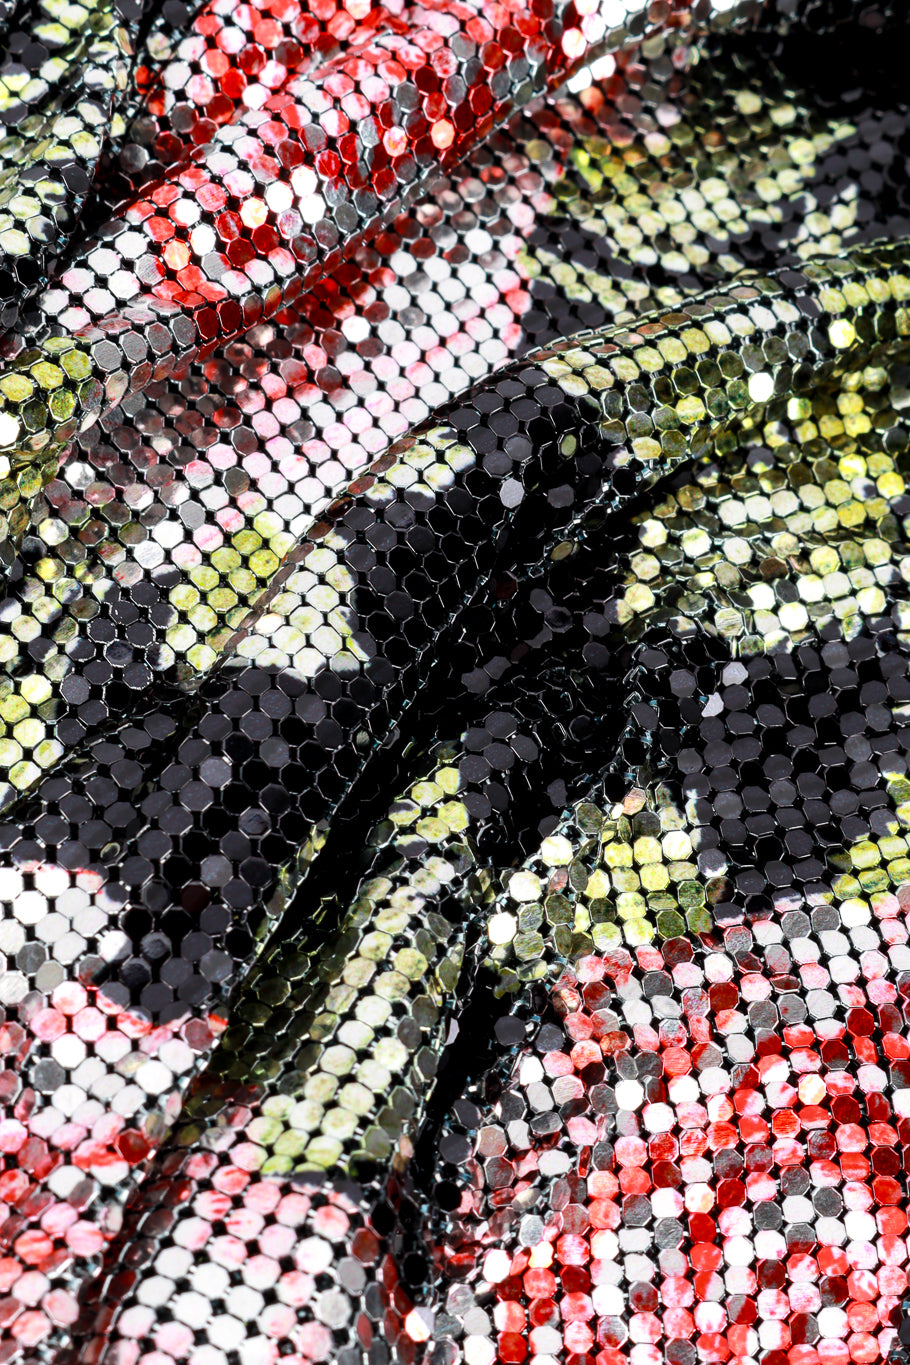 Paco Rabanne Metallic Rose Lace Dress fabric detail  @RECESS LA